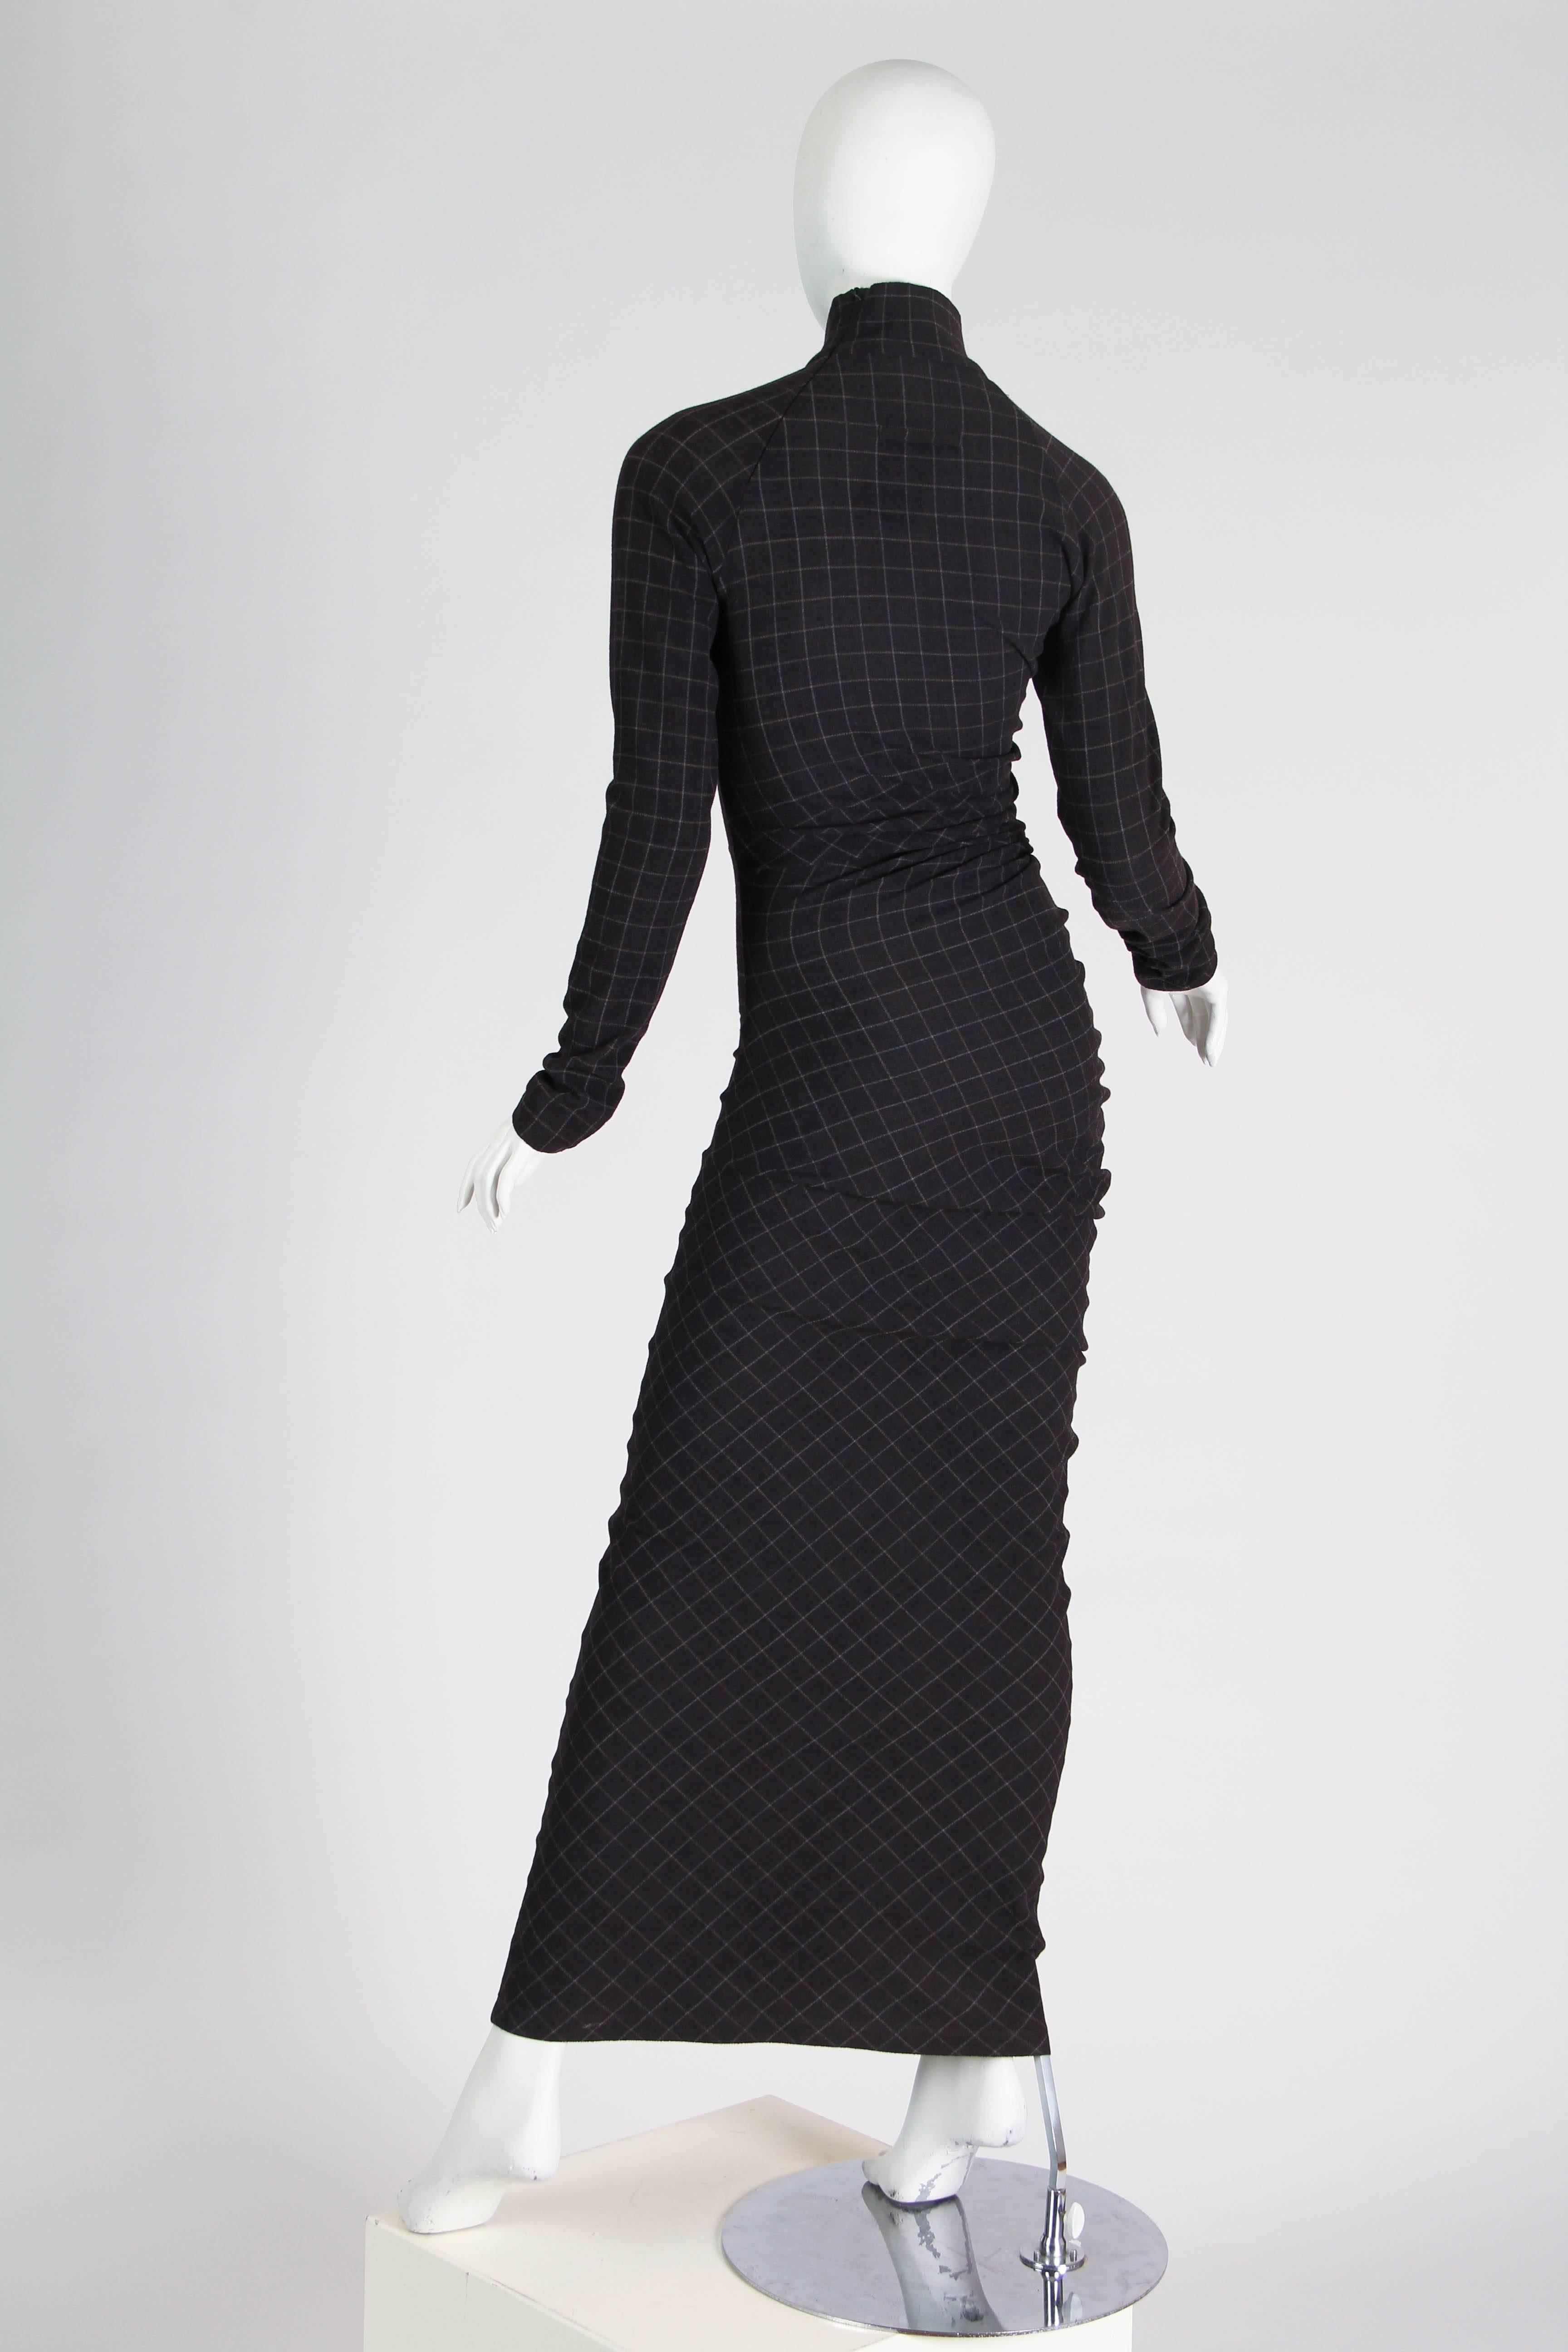 Black Jean Paul Gaultier Spiral Cut Dress